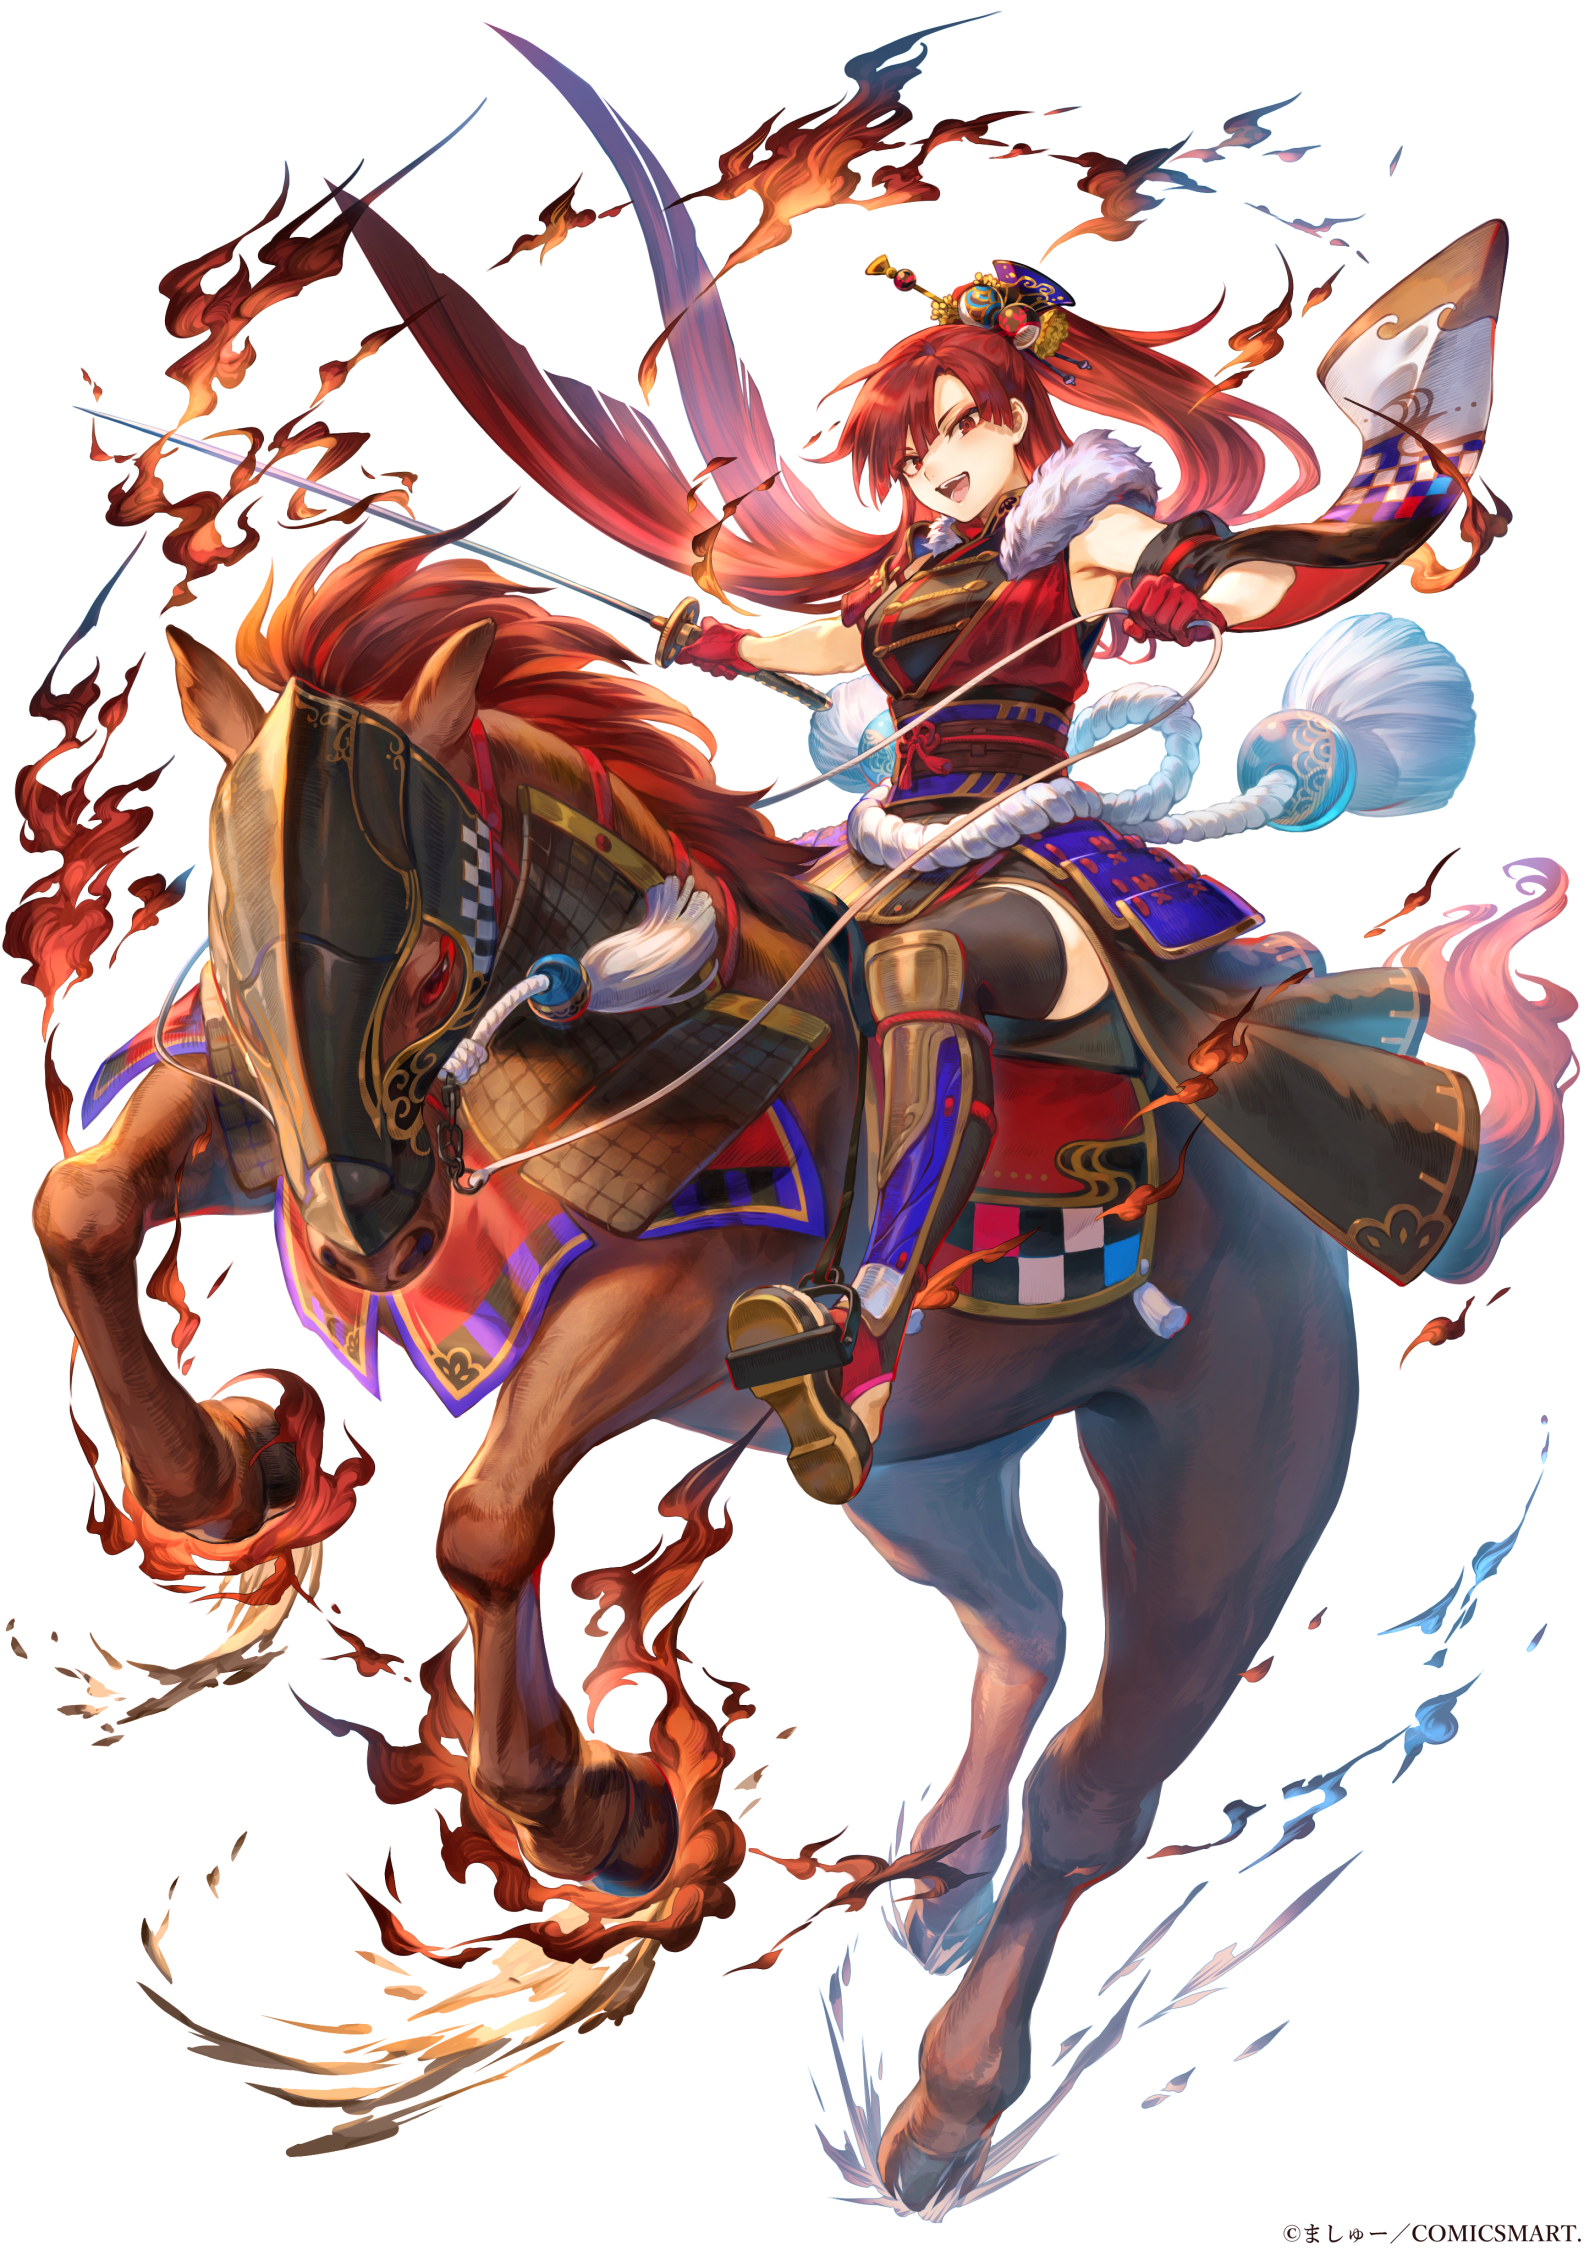 Anime 1587x2251 anime anime girls digital art artwork 2D portrait display Mashu 003 redhead red eyes sword armor horse